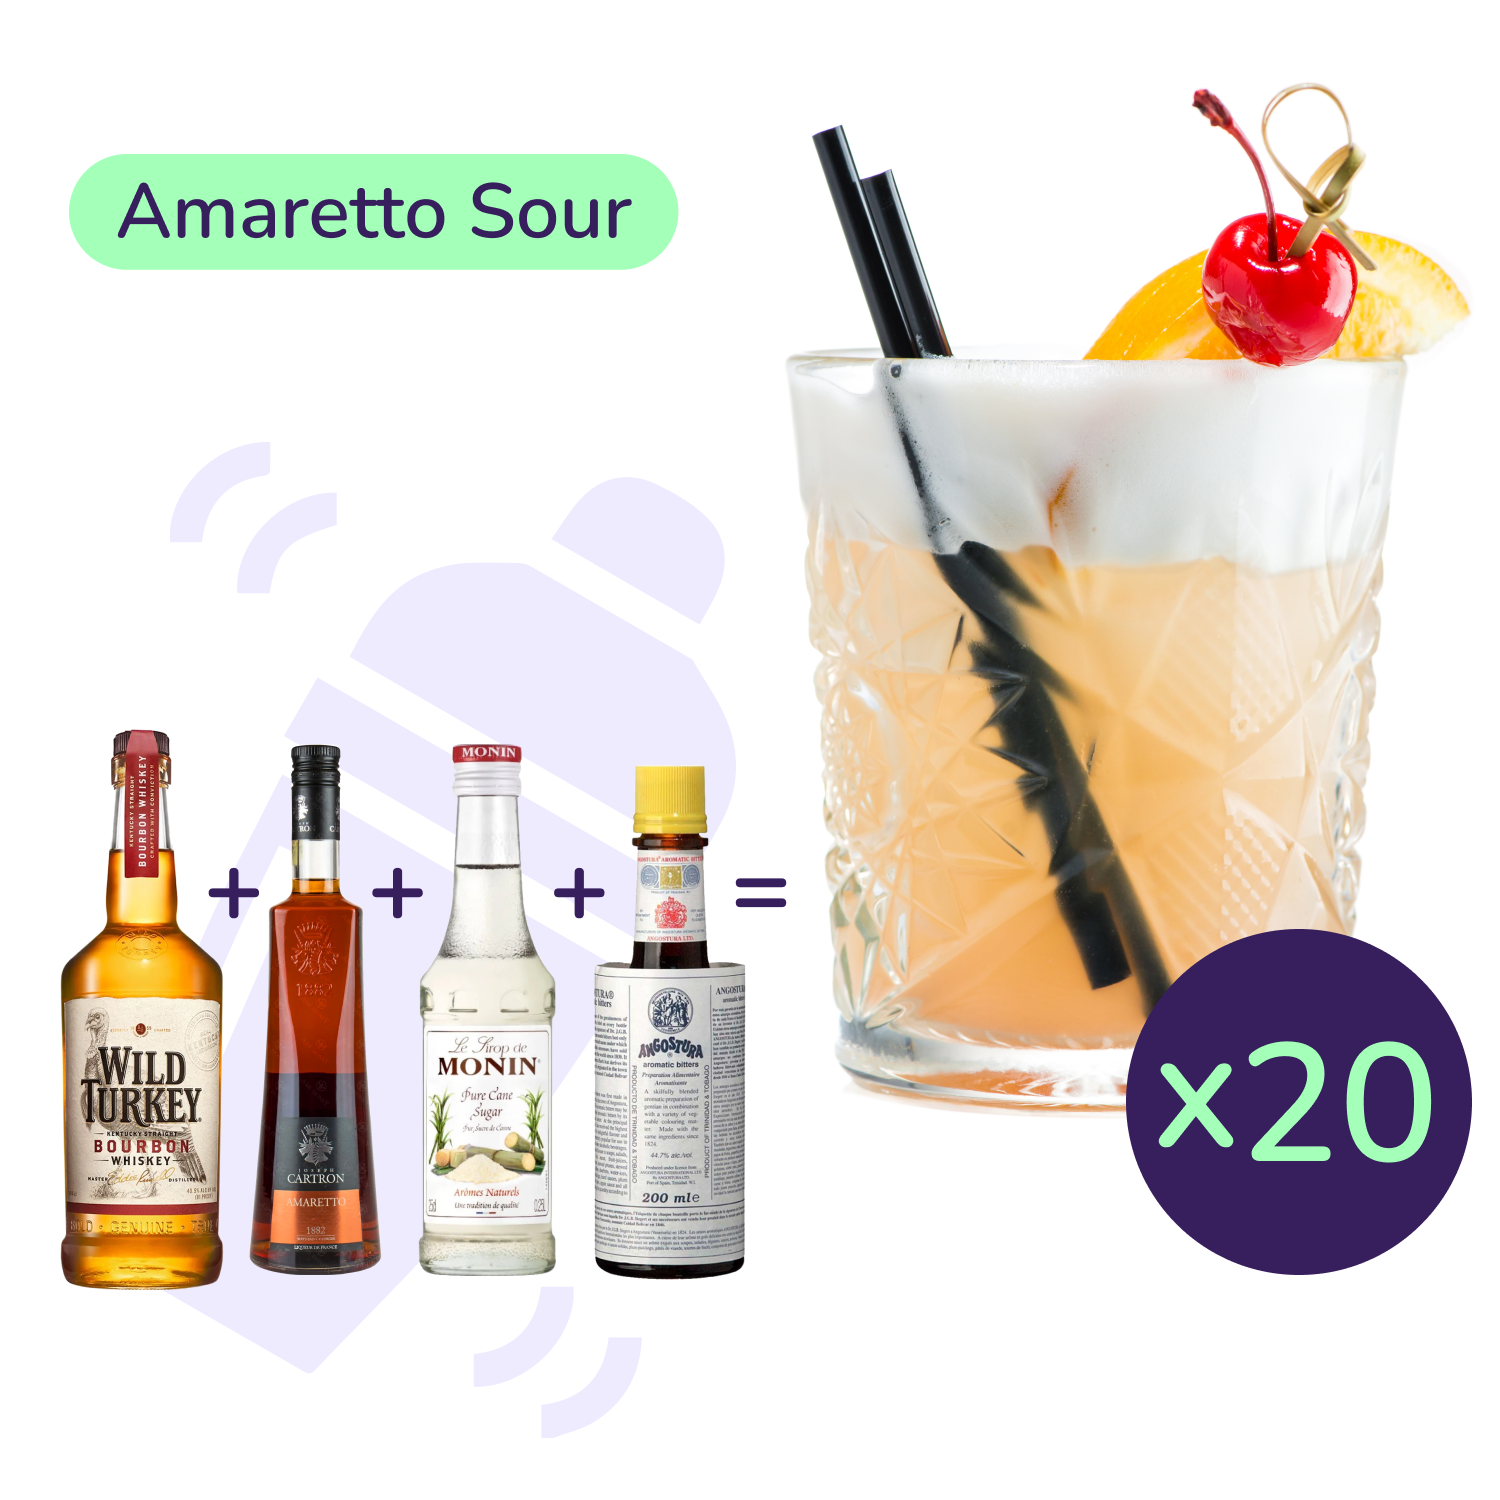 Коктейль Аmaretto Sour (набор ингредиентов) х20 на основе Wild Turkey - фото 1